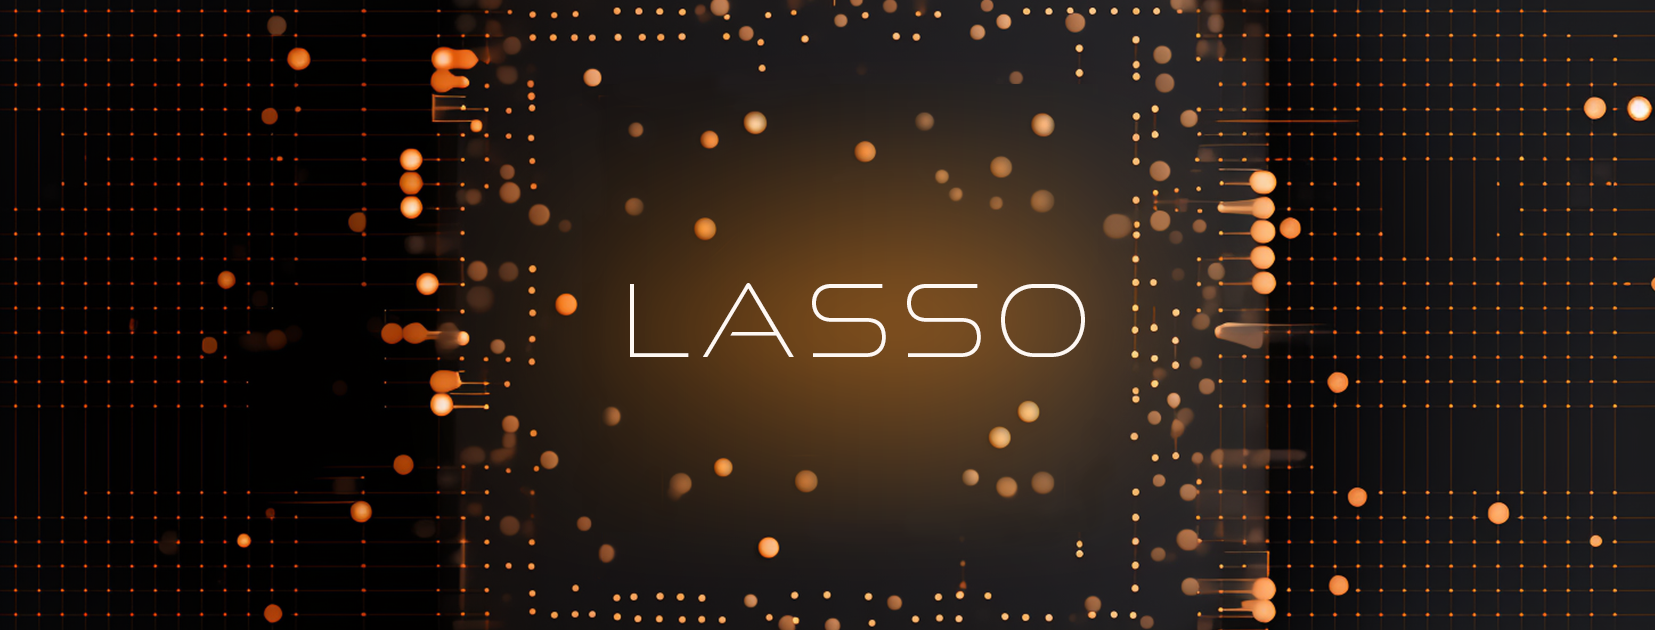 imgs/lasso_logo.png